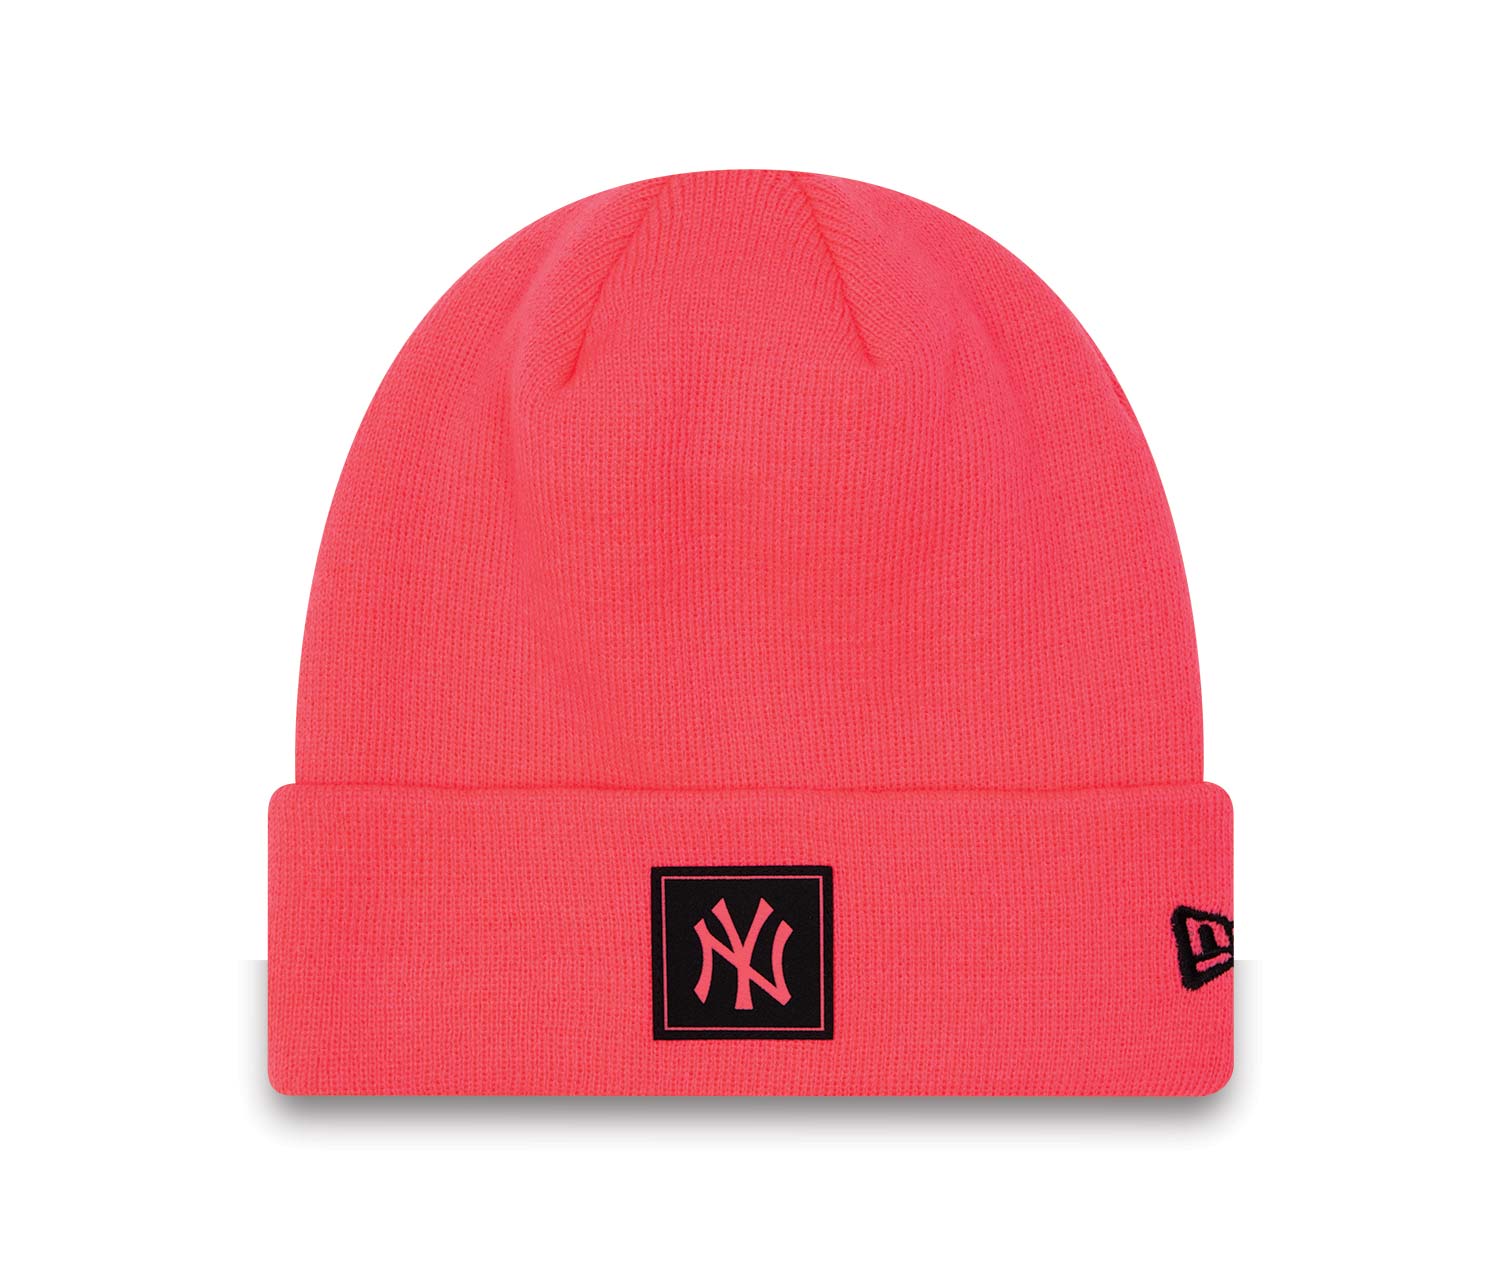 New York Yankees Neon Bright Pink Beanie Hat